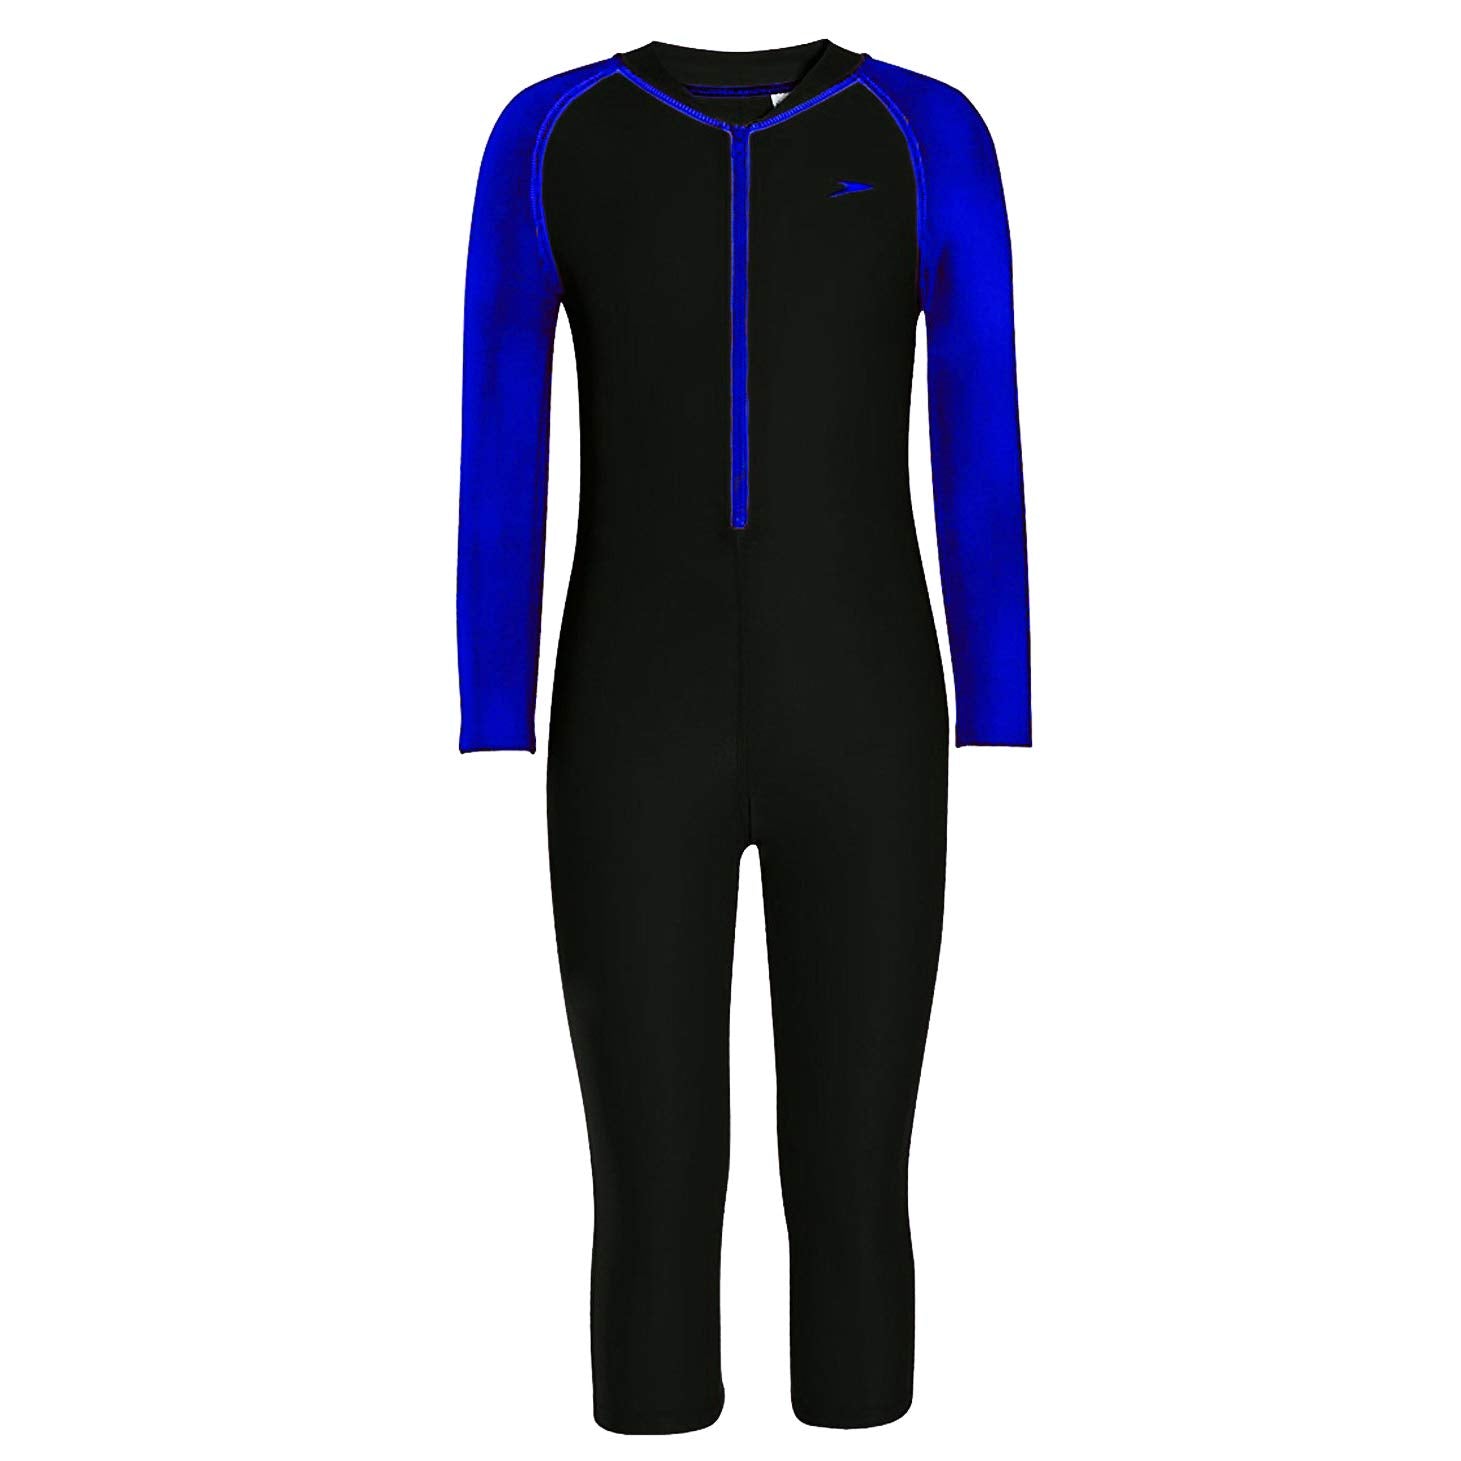 Speedo Boy's Swimwear Color Block All-in-1 Suit - Black/Royal Blue - Best Price online Prokicksports.com